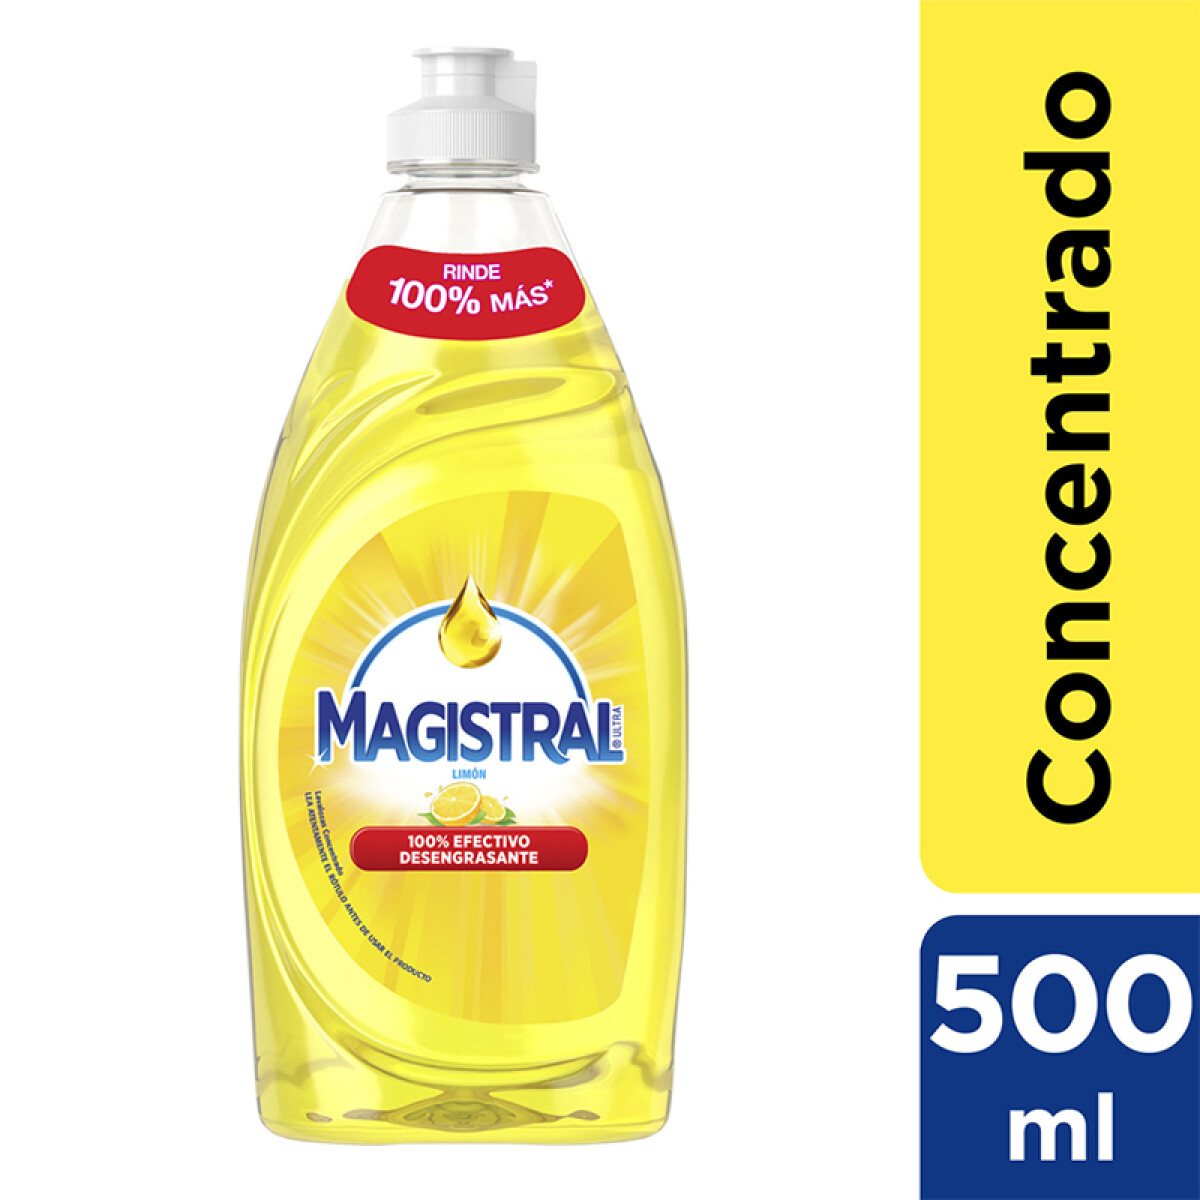 Detergente lavavajillas Magistral - Limón 